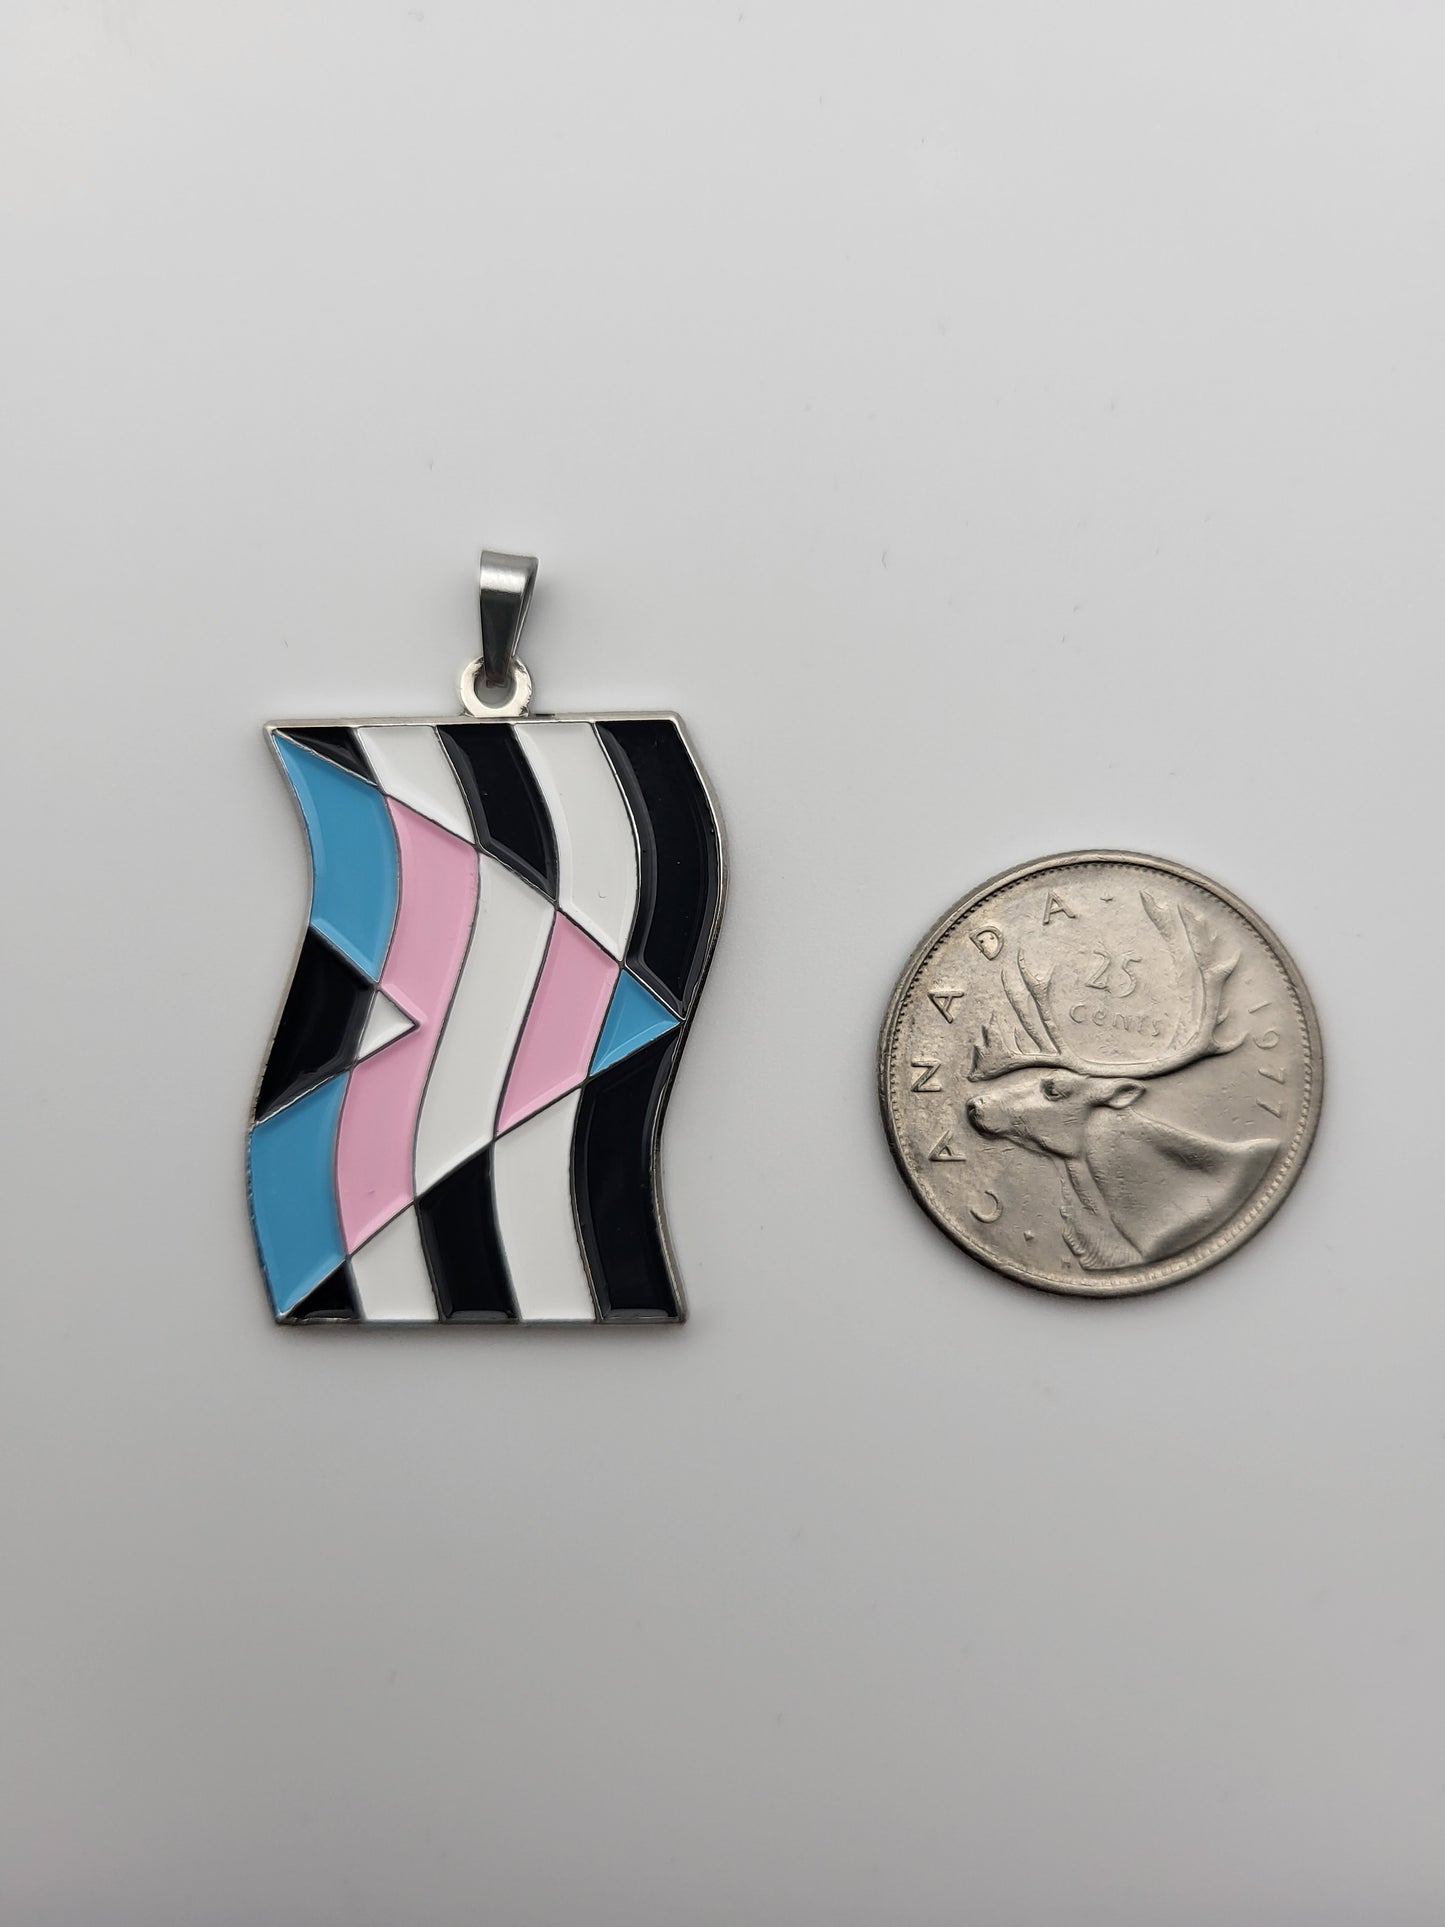 Ally Flag Enamel Pendant Necklace | Choose Rainbow or Transgender Flags